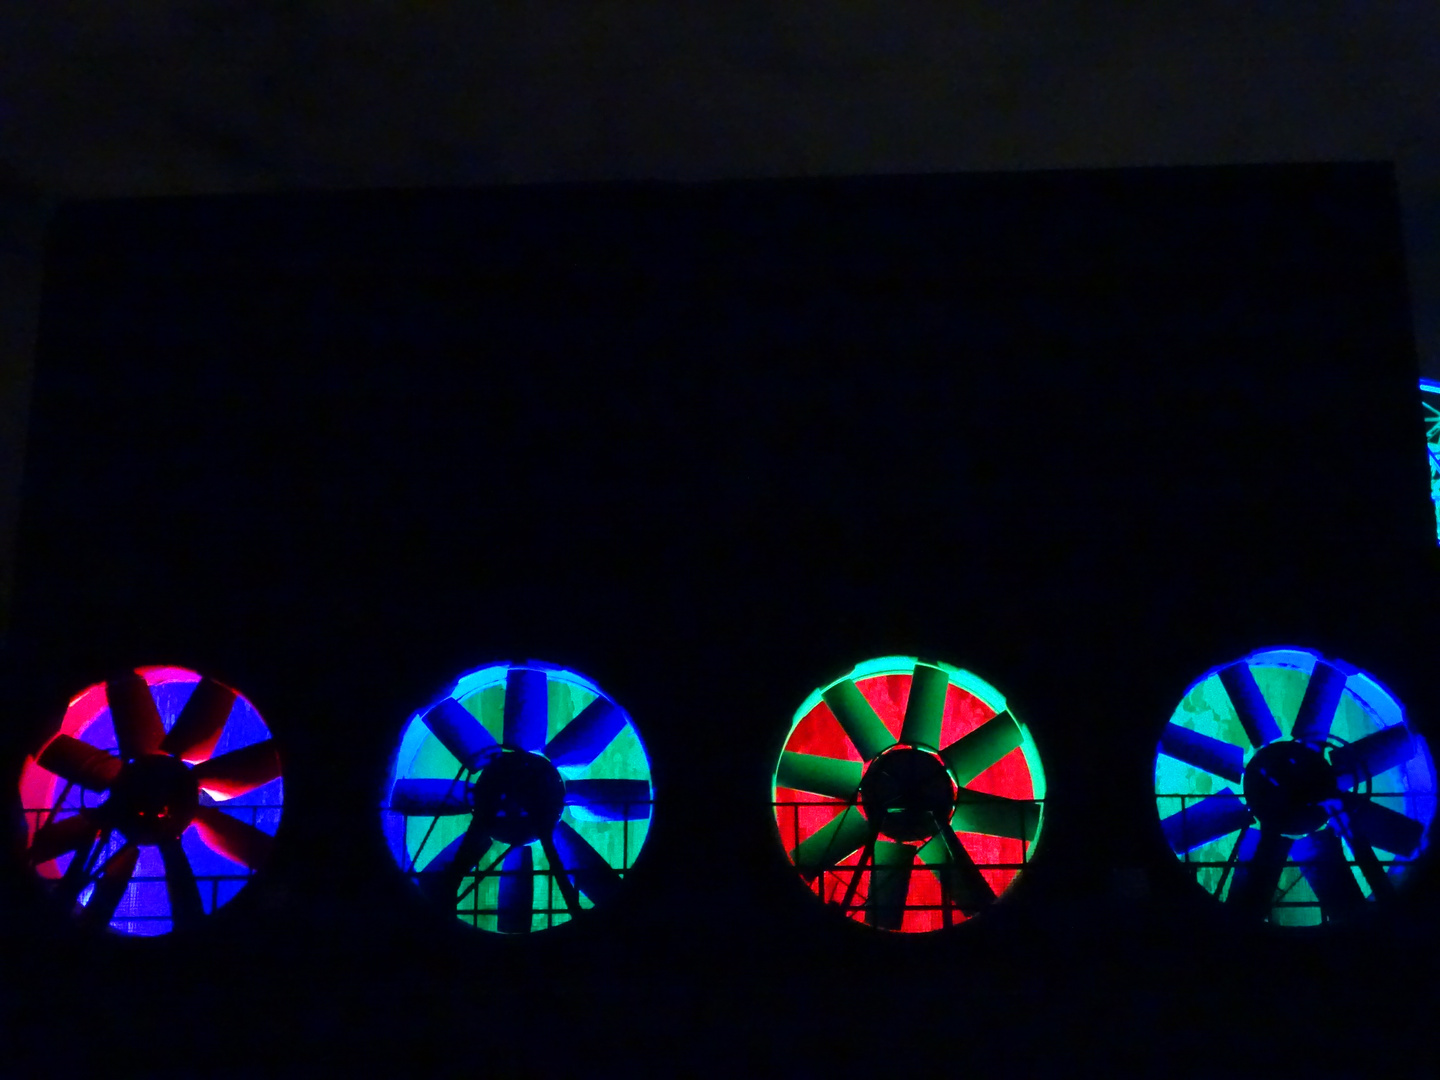 Illuminated Turbines at Duisburg